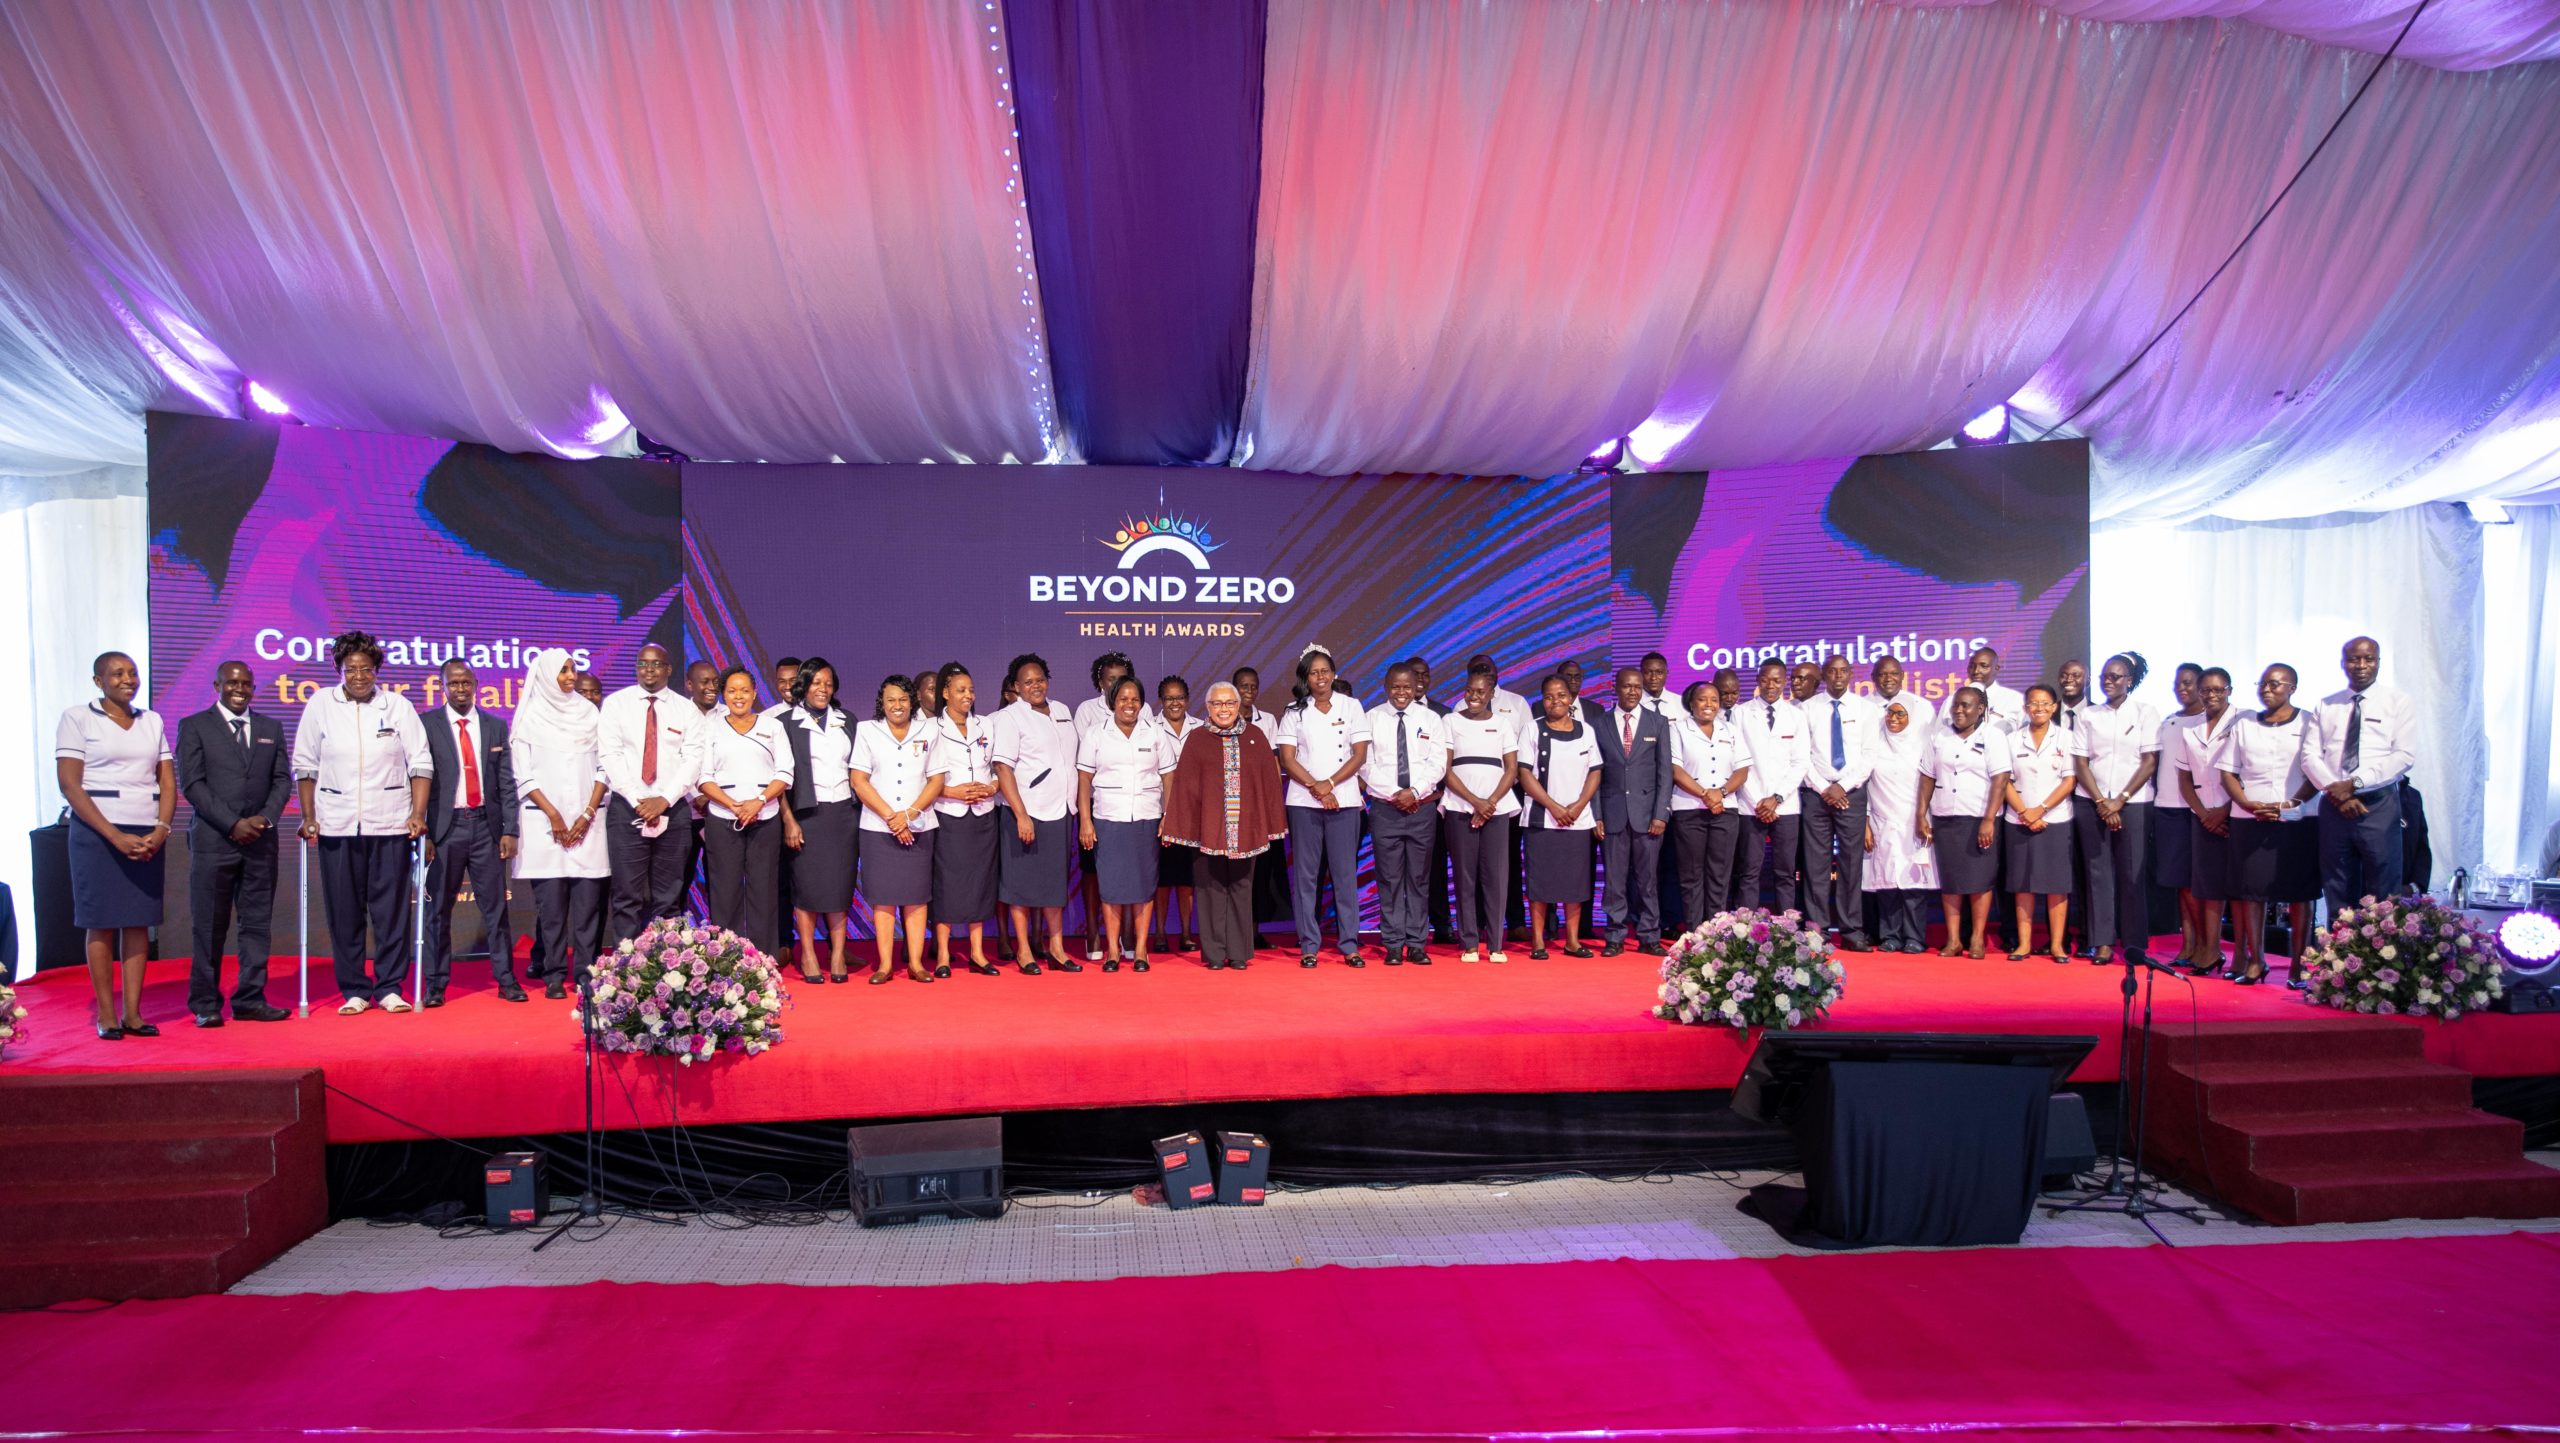 First Lady Margaret Kenyatta hosts Beyond Zero summit 2021, awards nurses and midwives